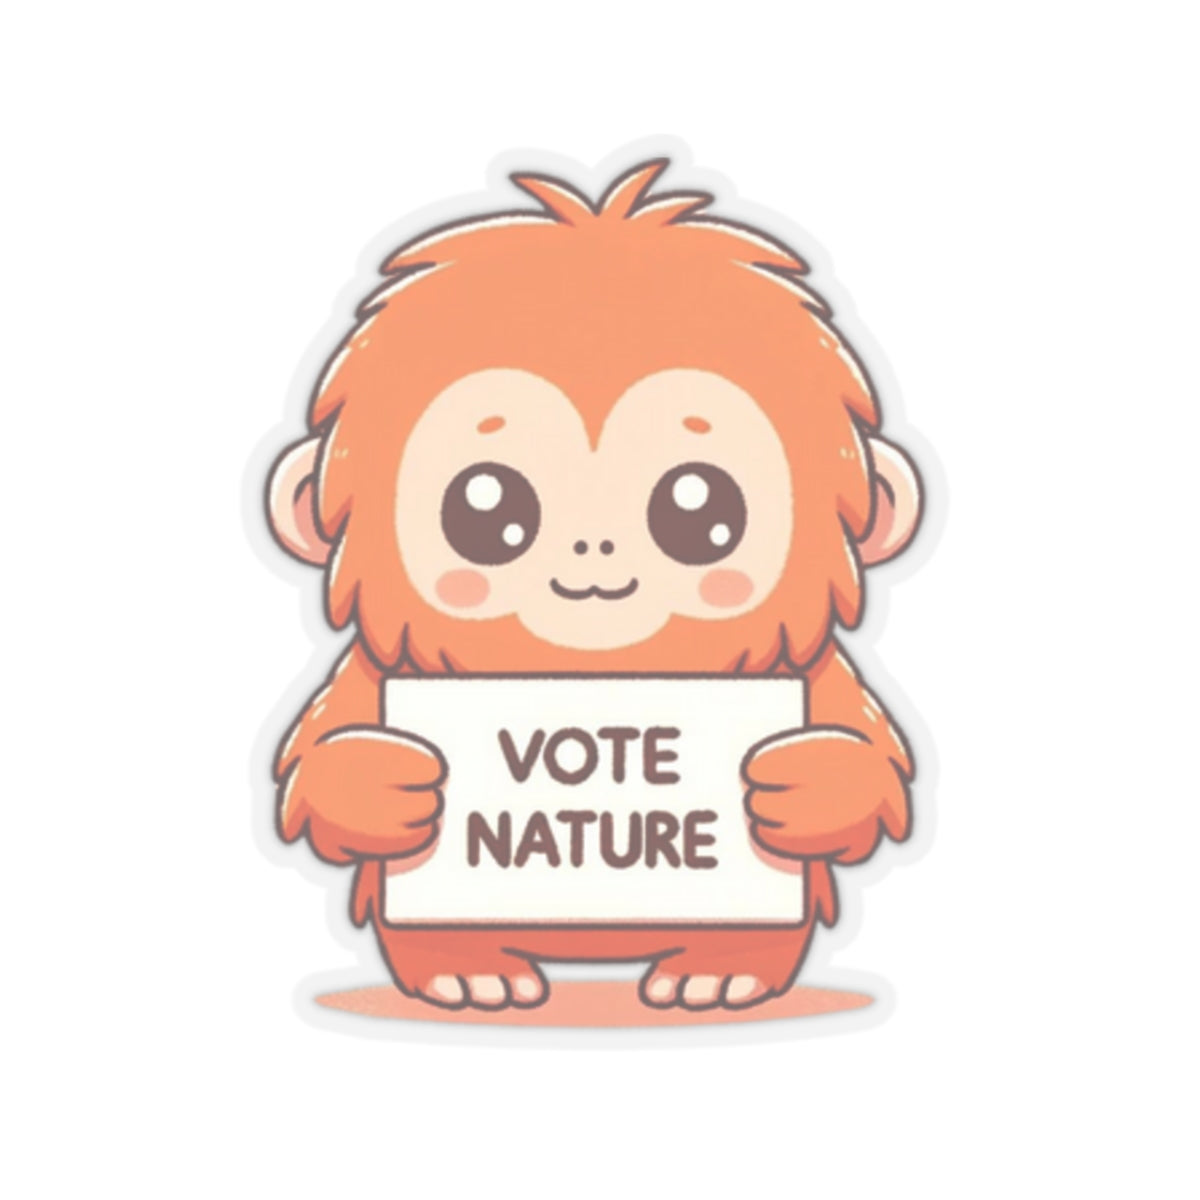 Inspirational Cute Orangutan Statement vinyl Sticker: Vote Nature! for laptop, kindle, phone, ipad, instrument case, notebook, mood board